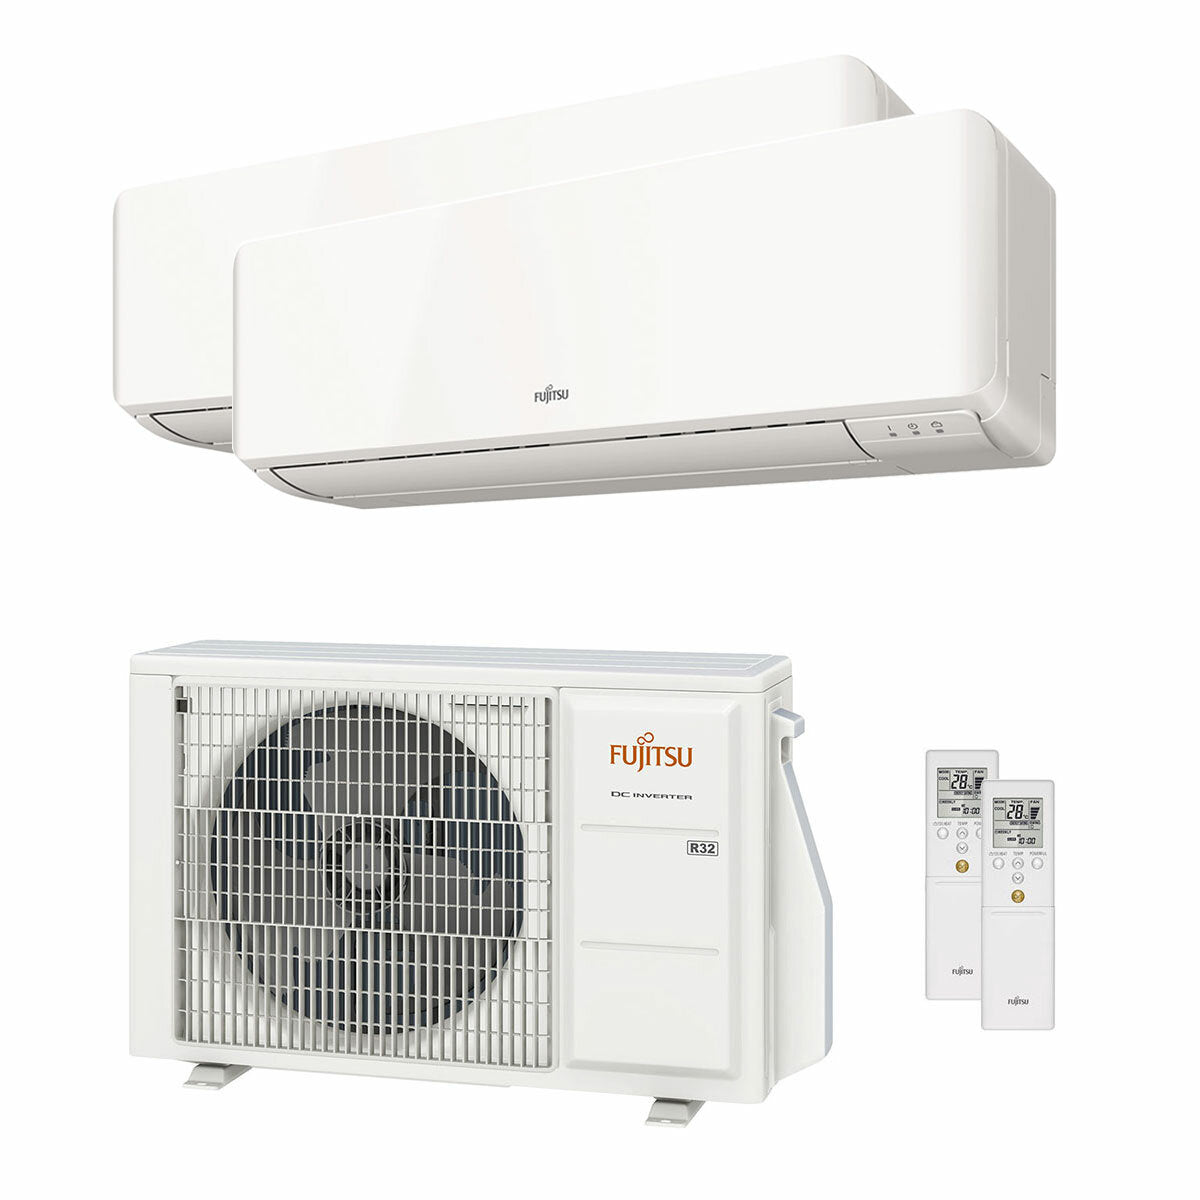 Fujitsu KM WiFi Series dual split air conditioner 7000+9000 BTU inverter A+++ external unit 4 kW